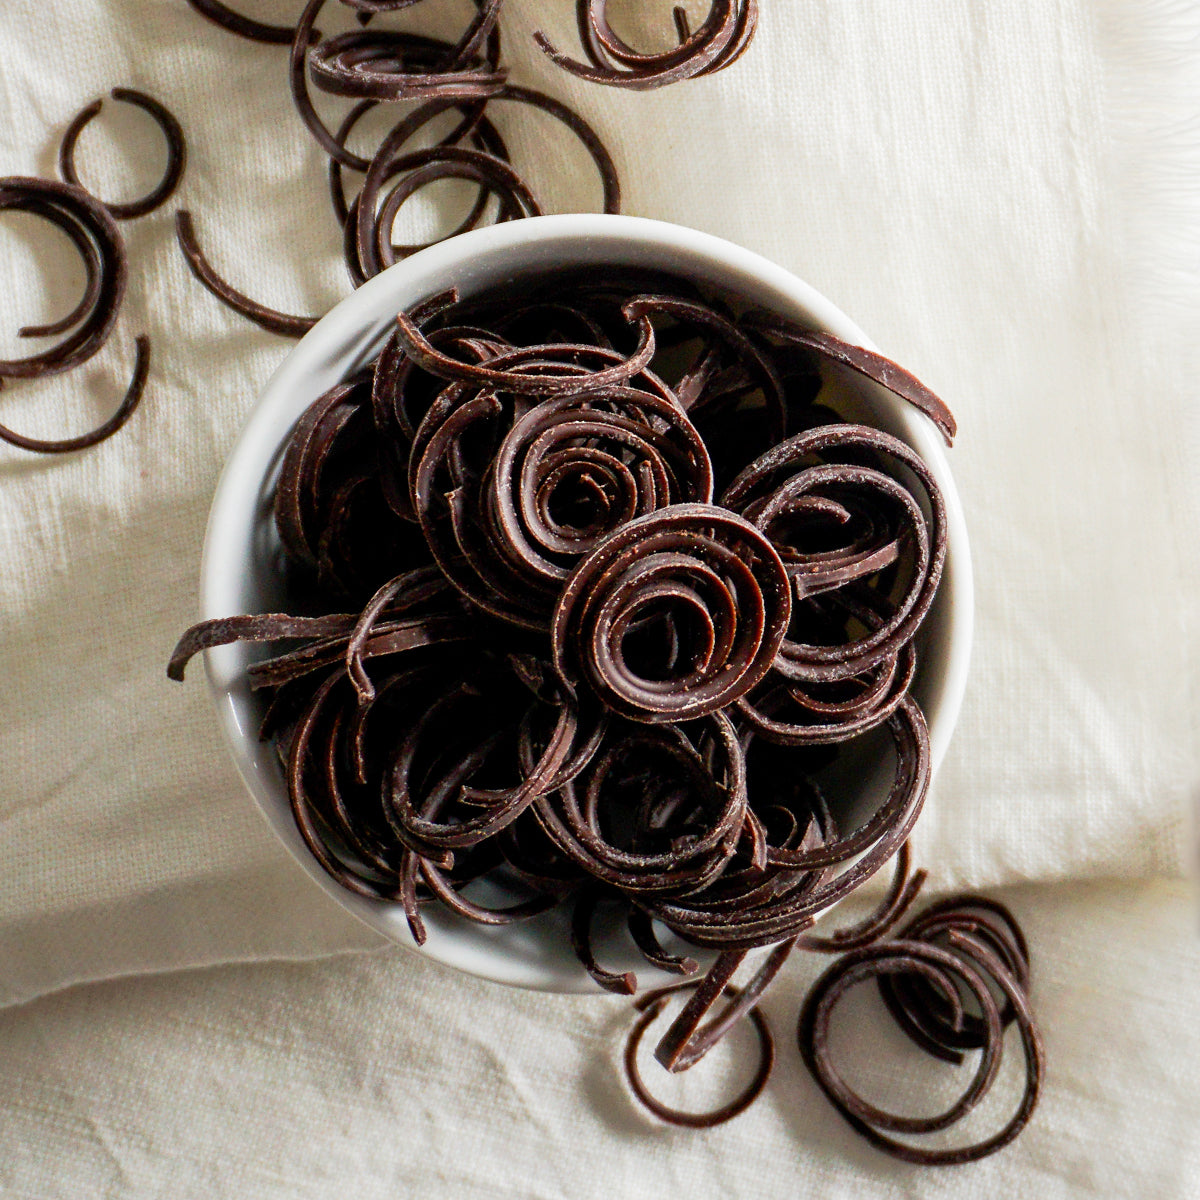 white bowl of dark chocolate spaghetti curls